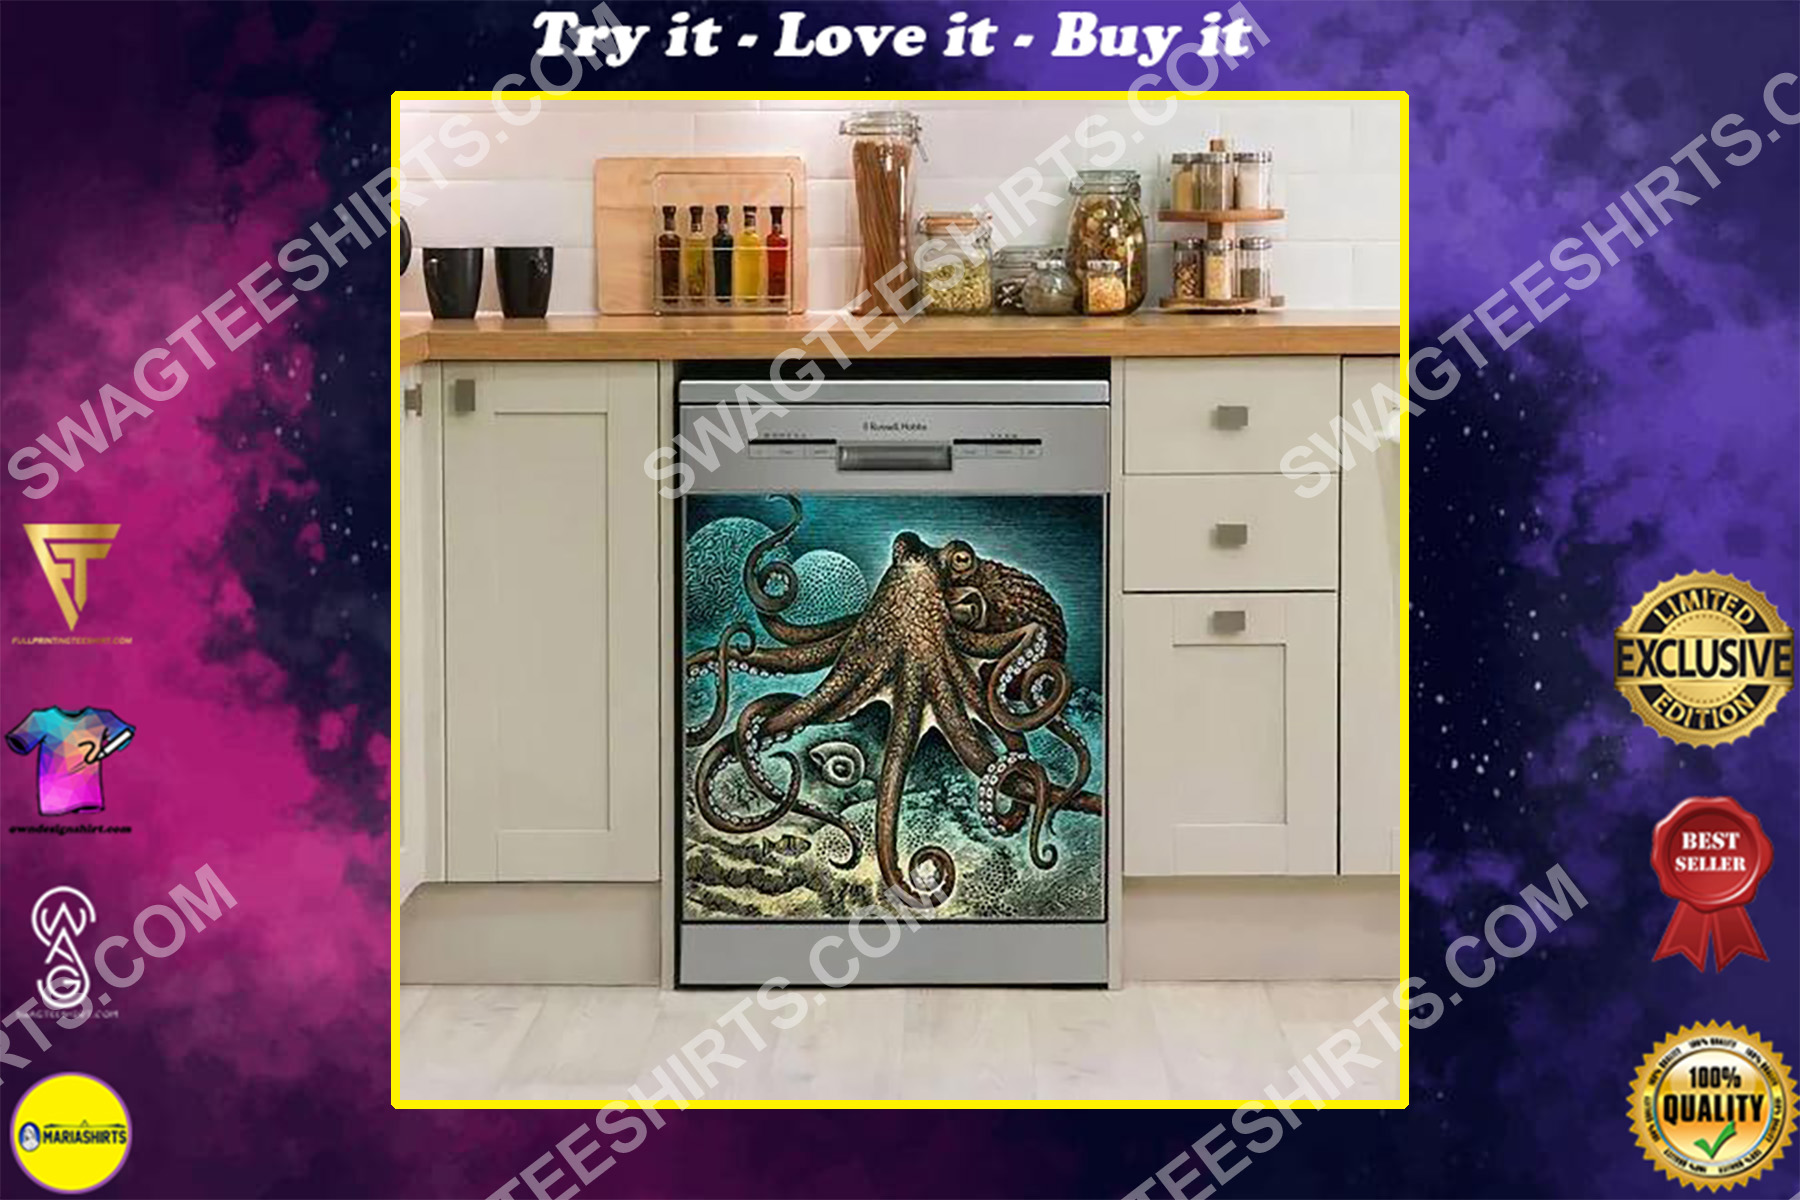 octopus blue kitchen decorative dishwasher magnet cover